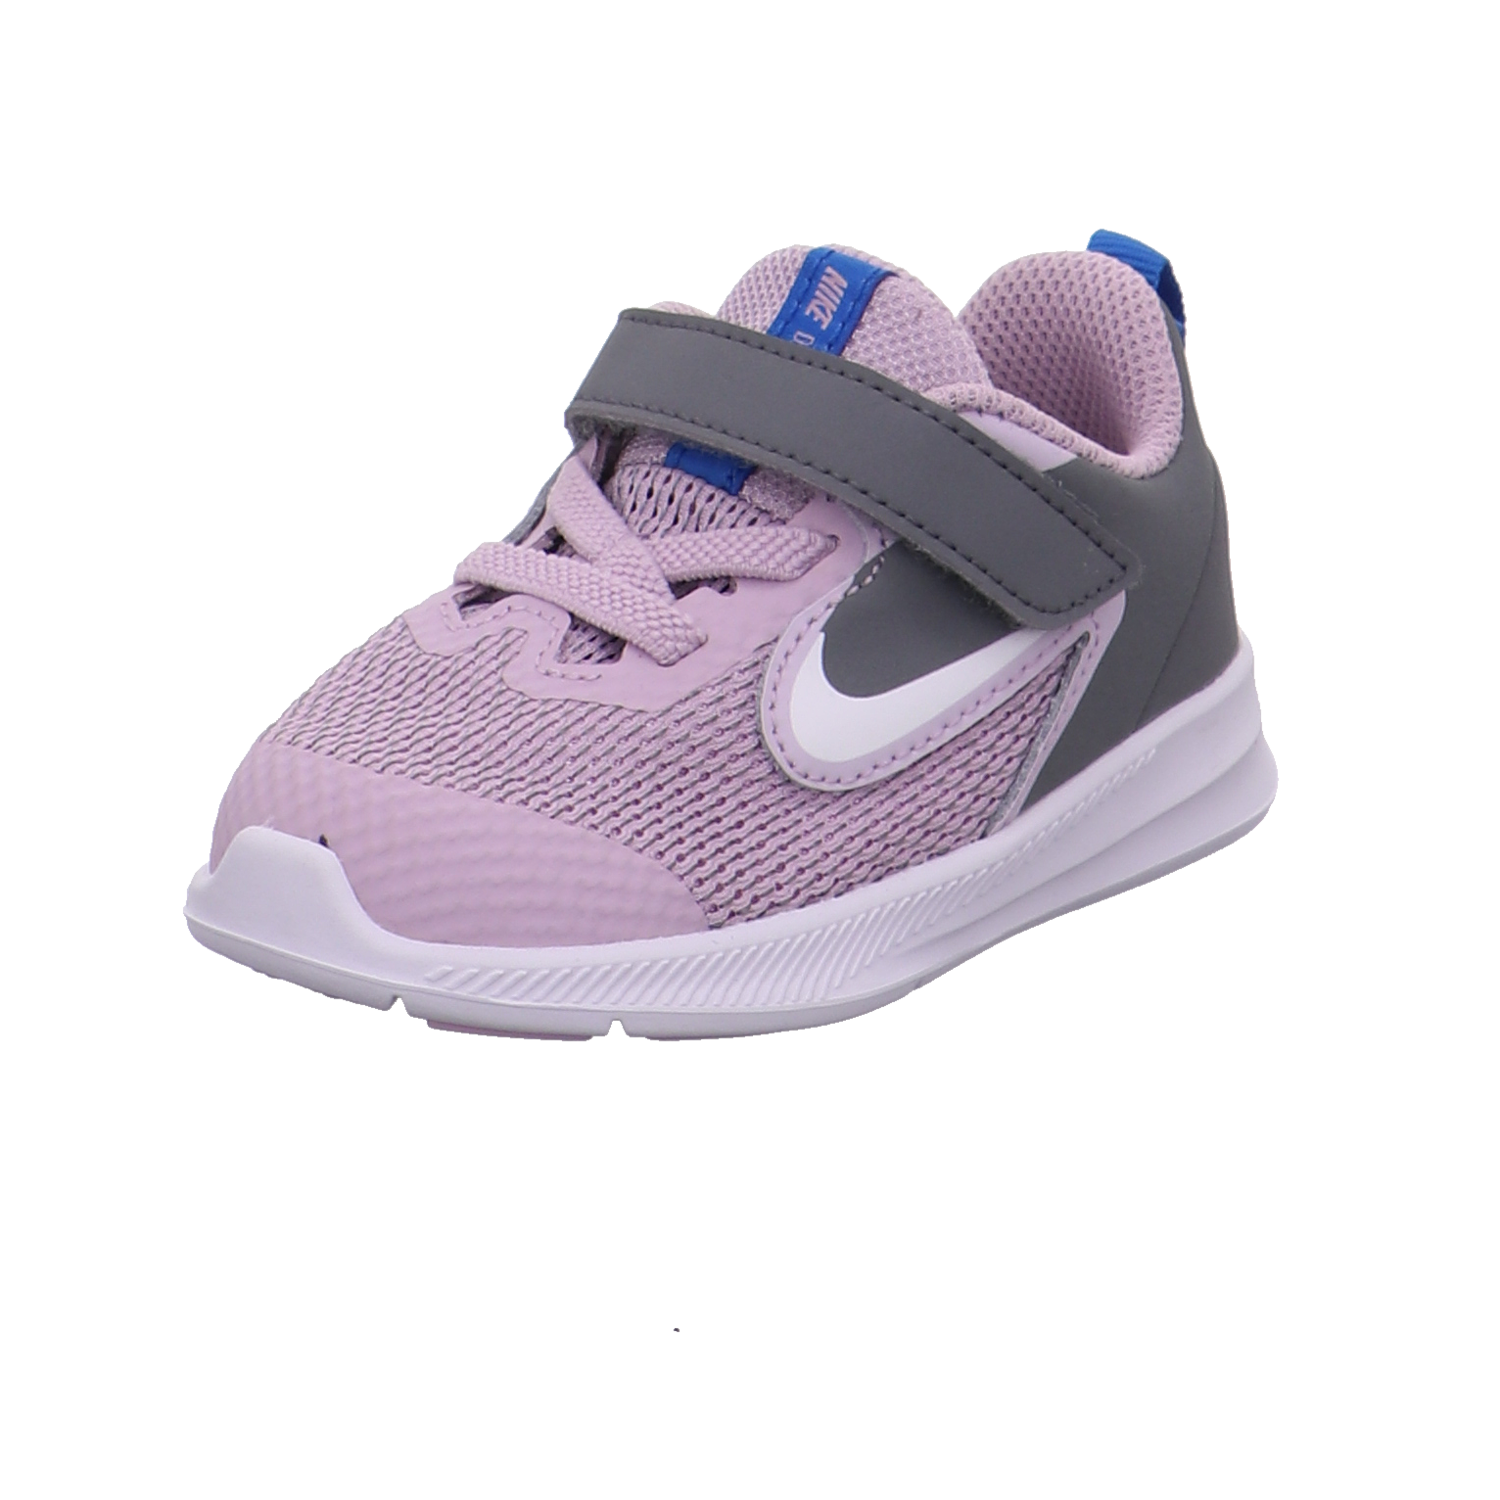 Nike Krabbel- und Lauflernschuhe viola lila Bild1